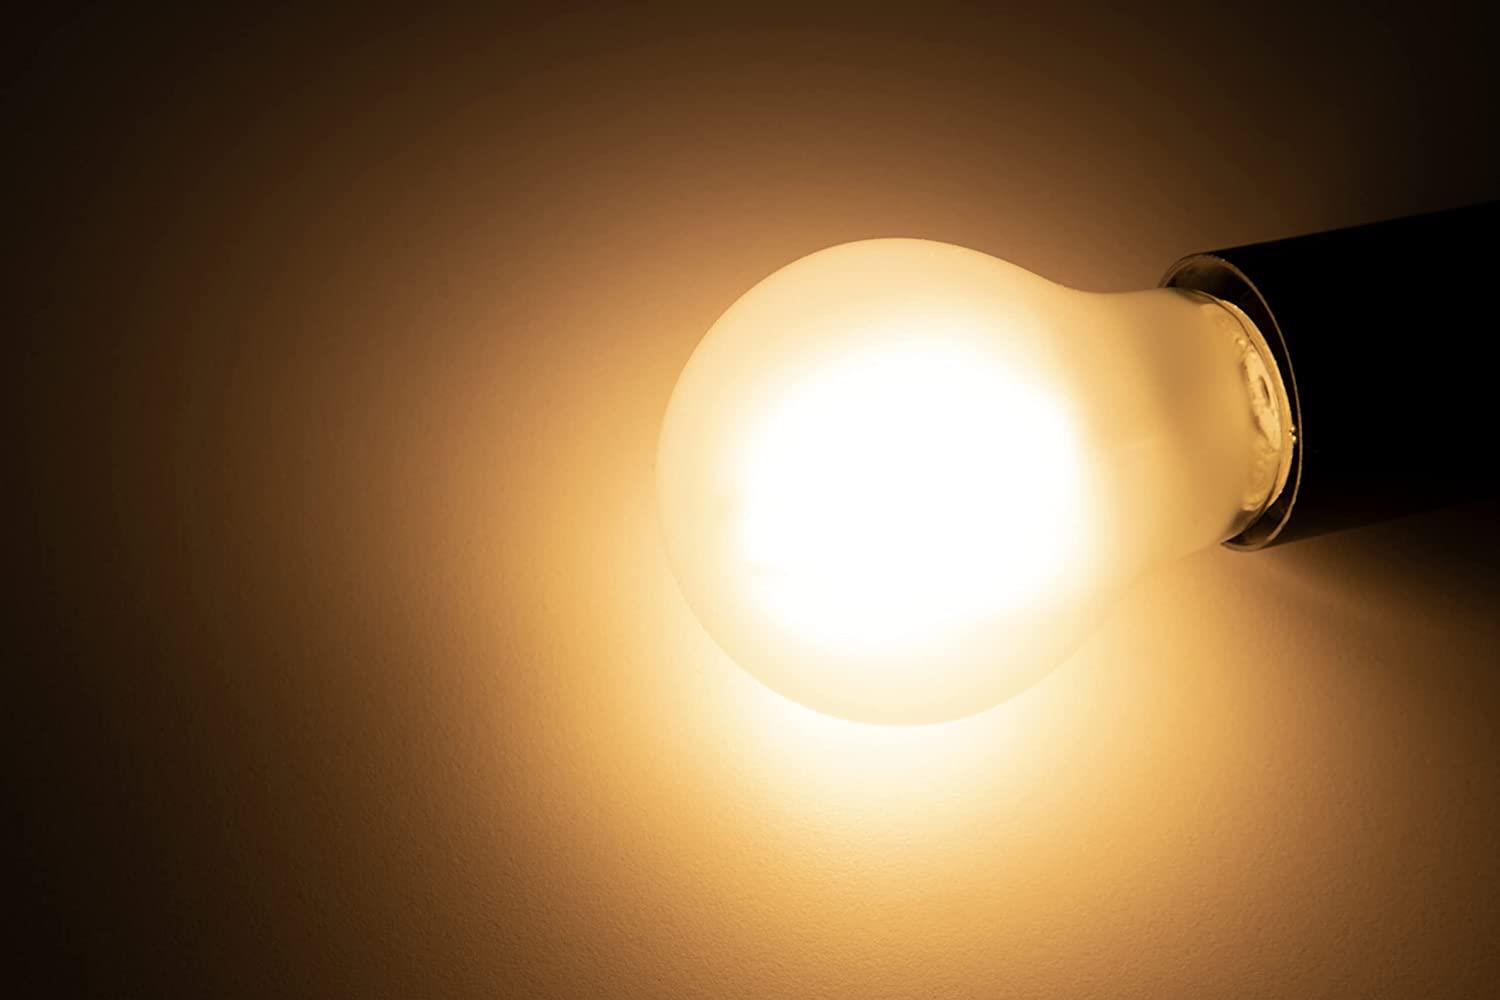 LED Filament Glühlampe McShine ''Filed'', E27, 6W, 630lm, warmweiß, matt